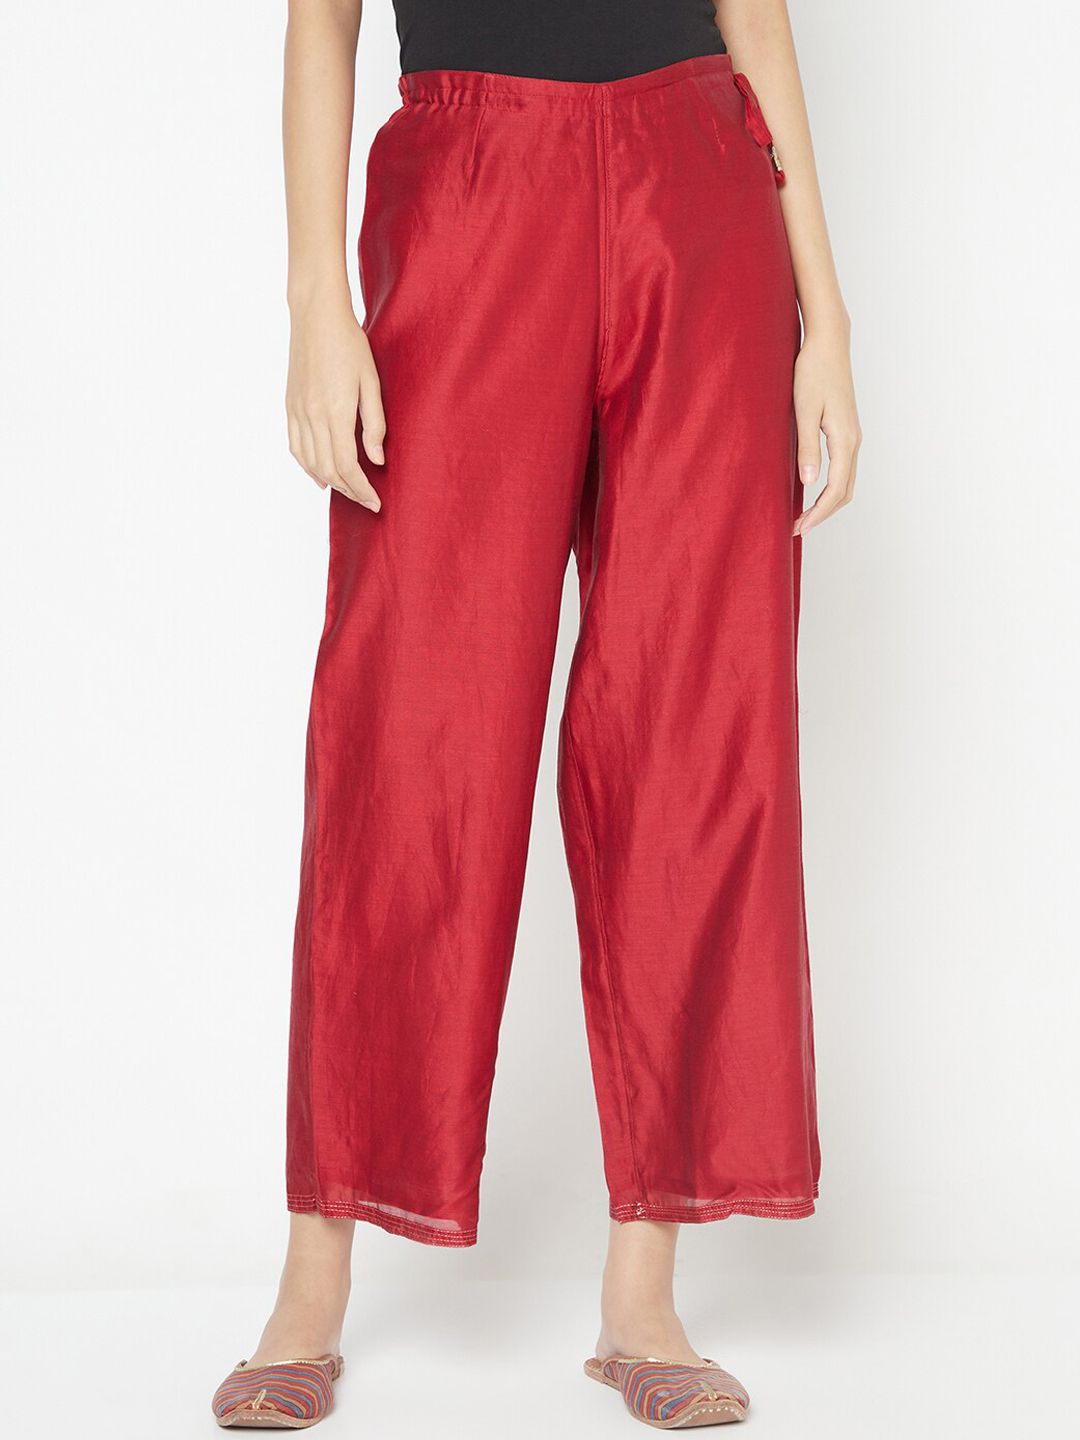 Fabindia Women Red Cotton Silk Trousers Price in India